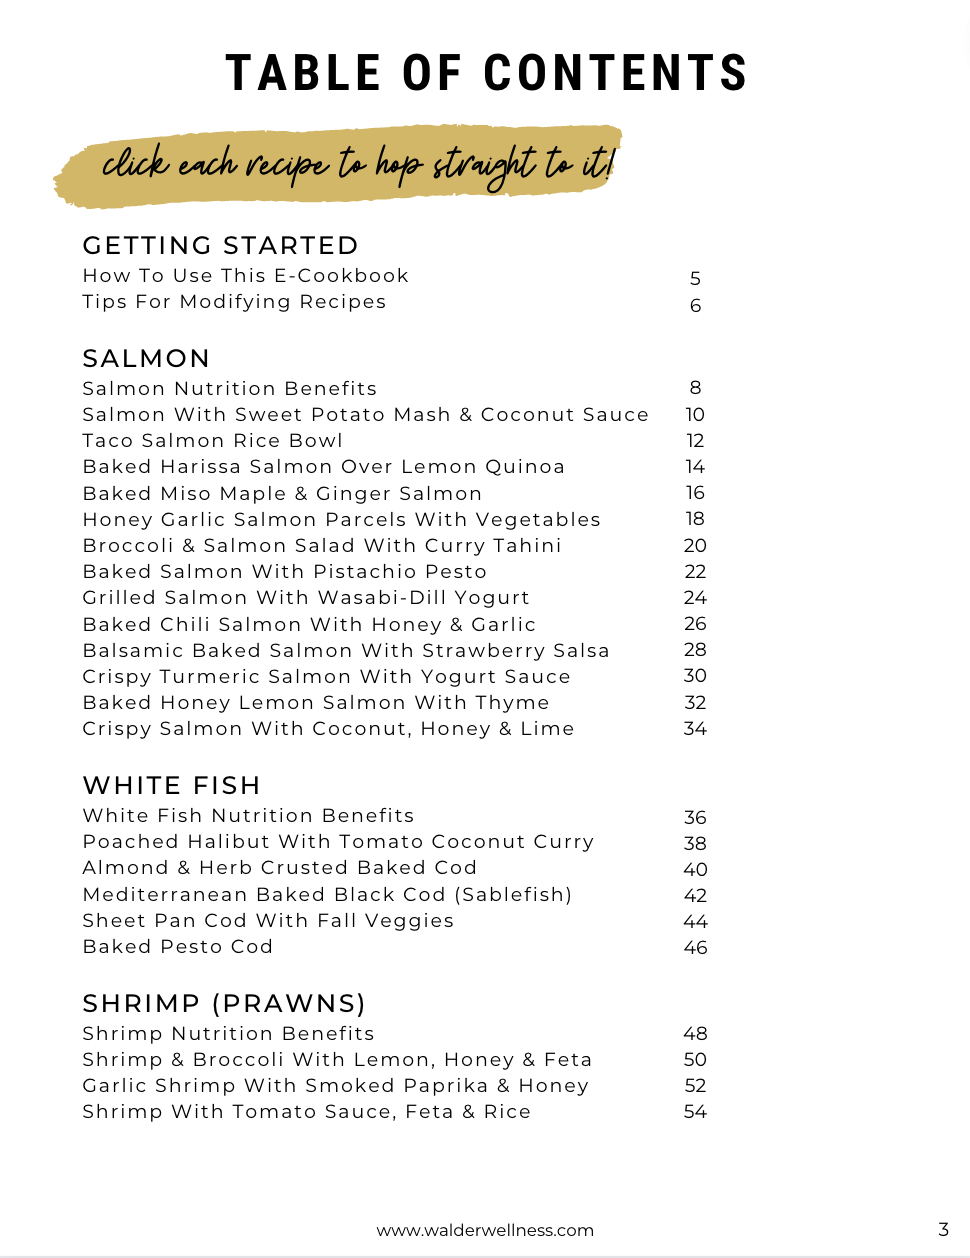 Healthy Seafood Dinners Ebook